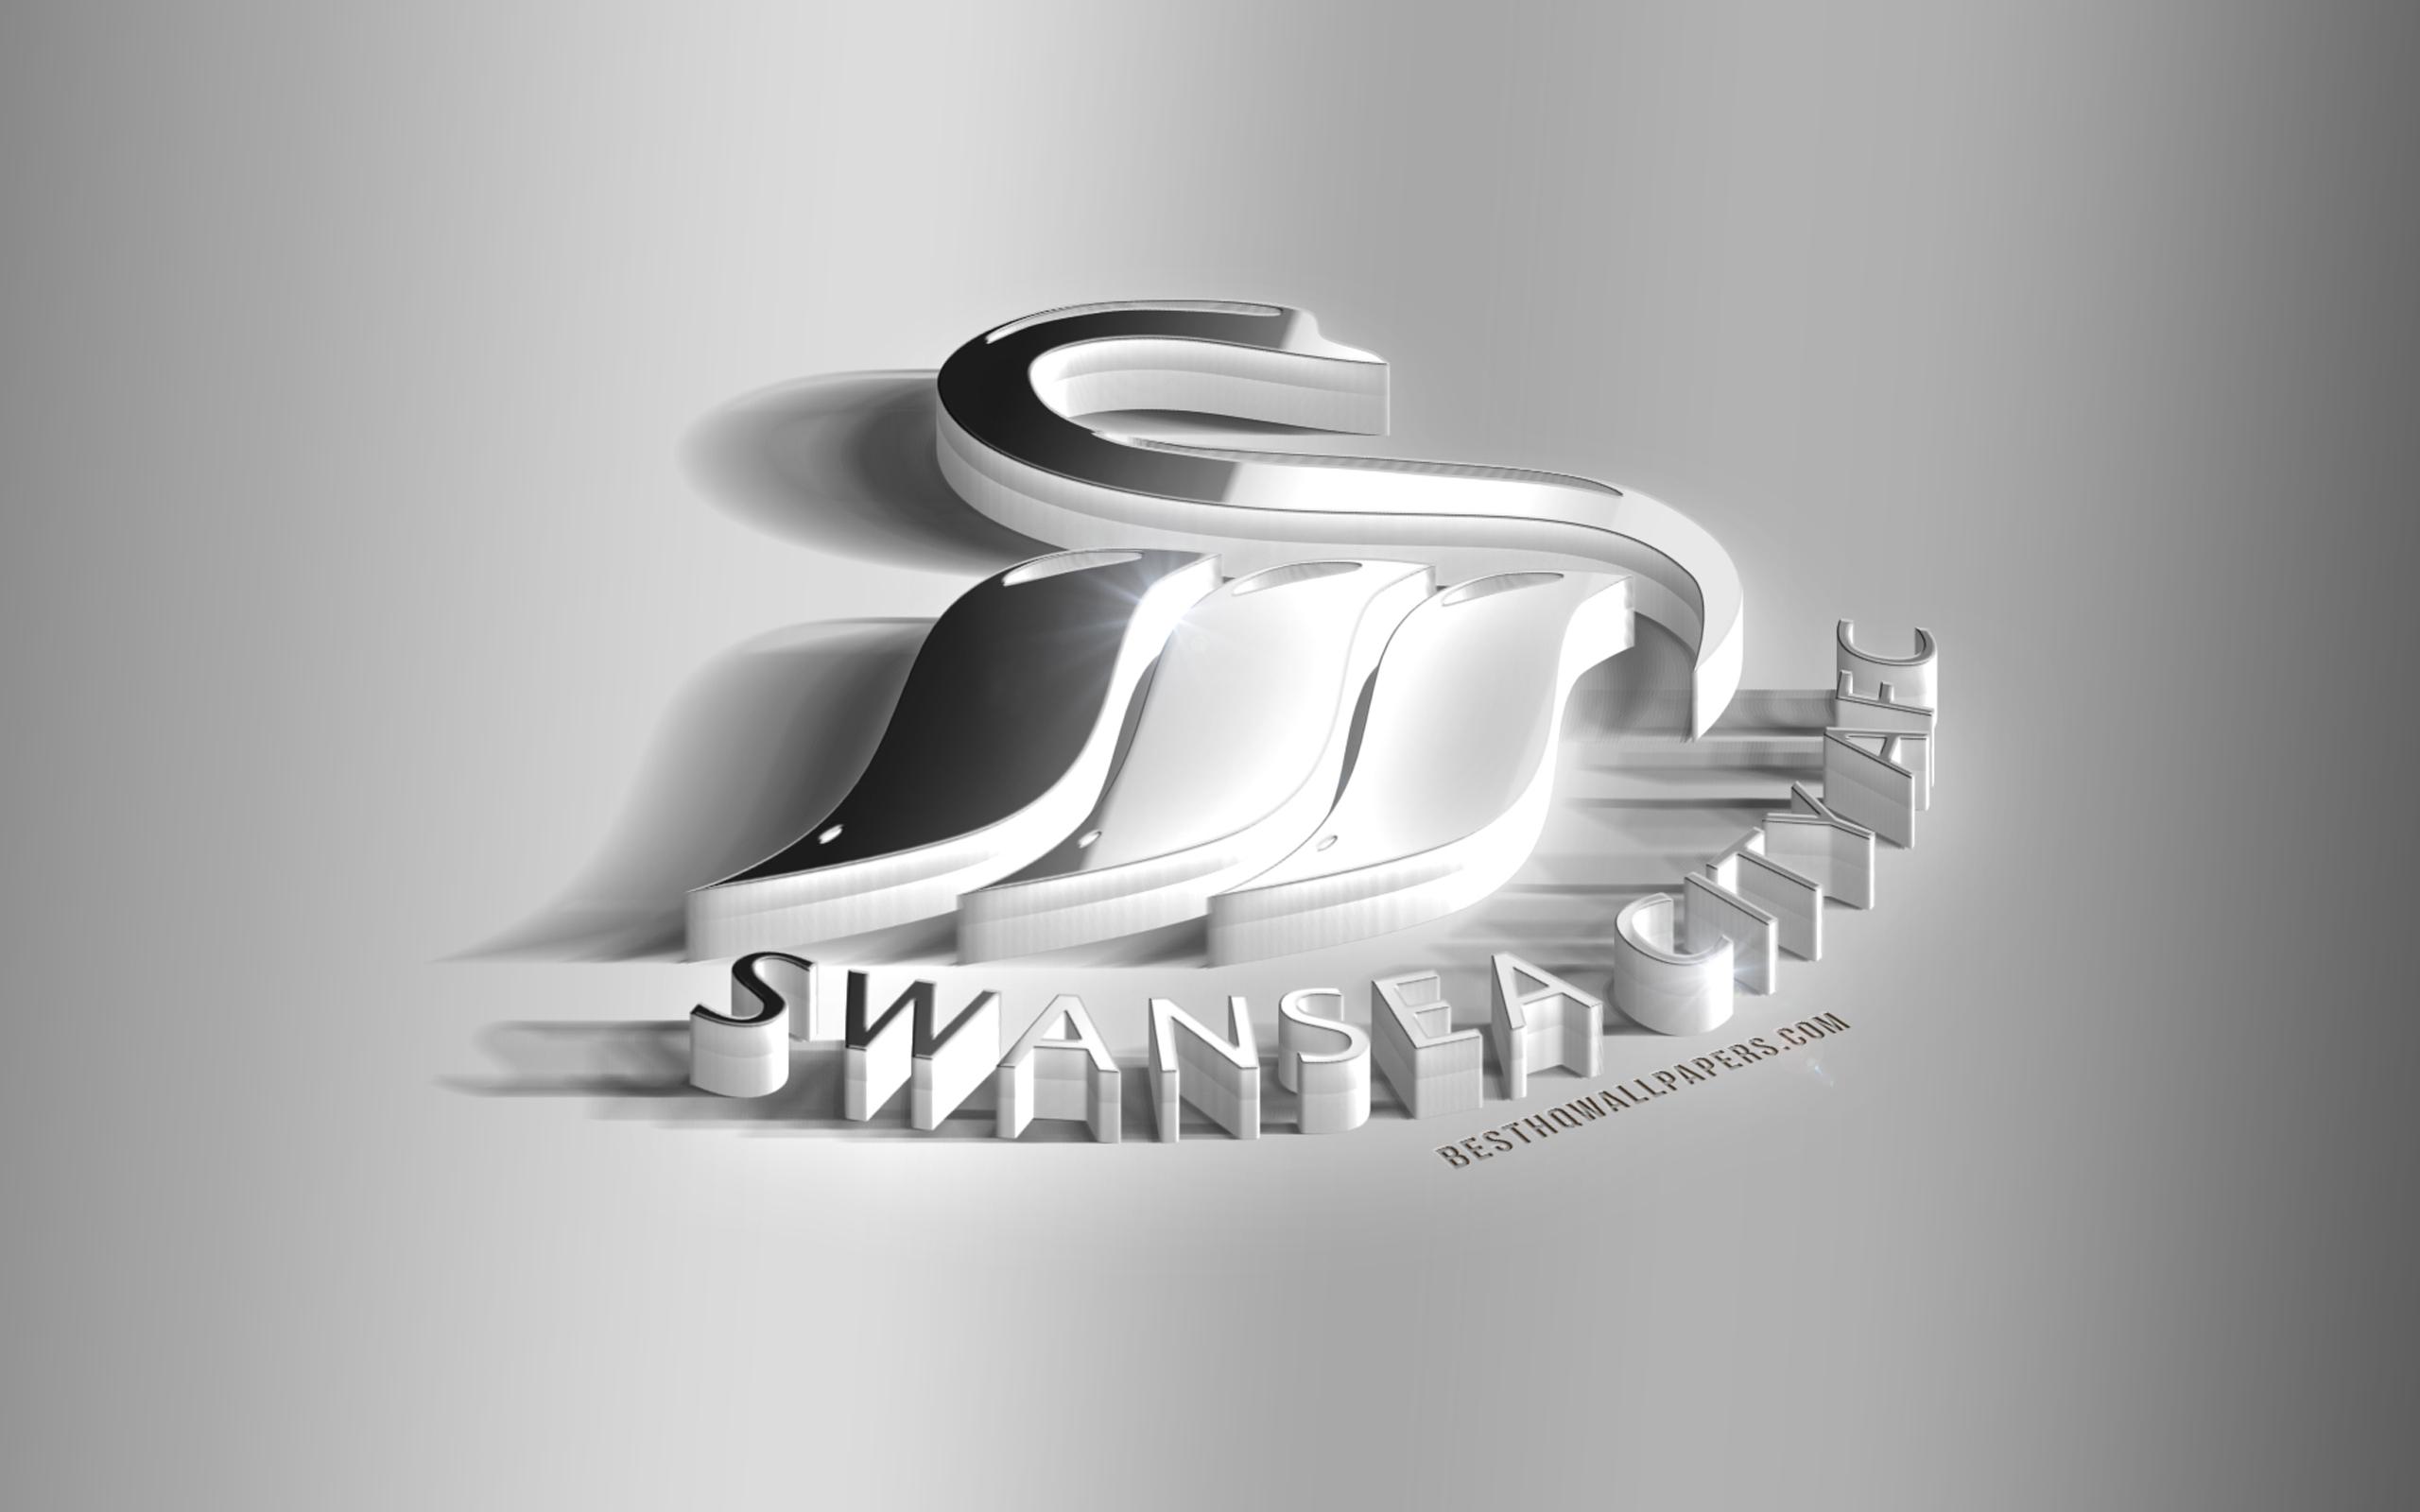 Download wallpaper Swansea City AFC, 3D steel logo, Welsh